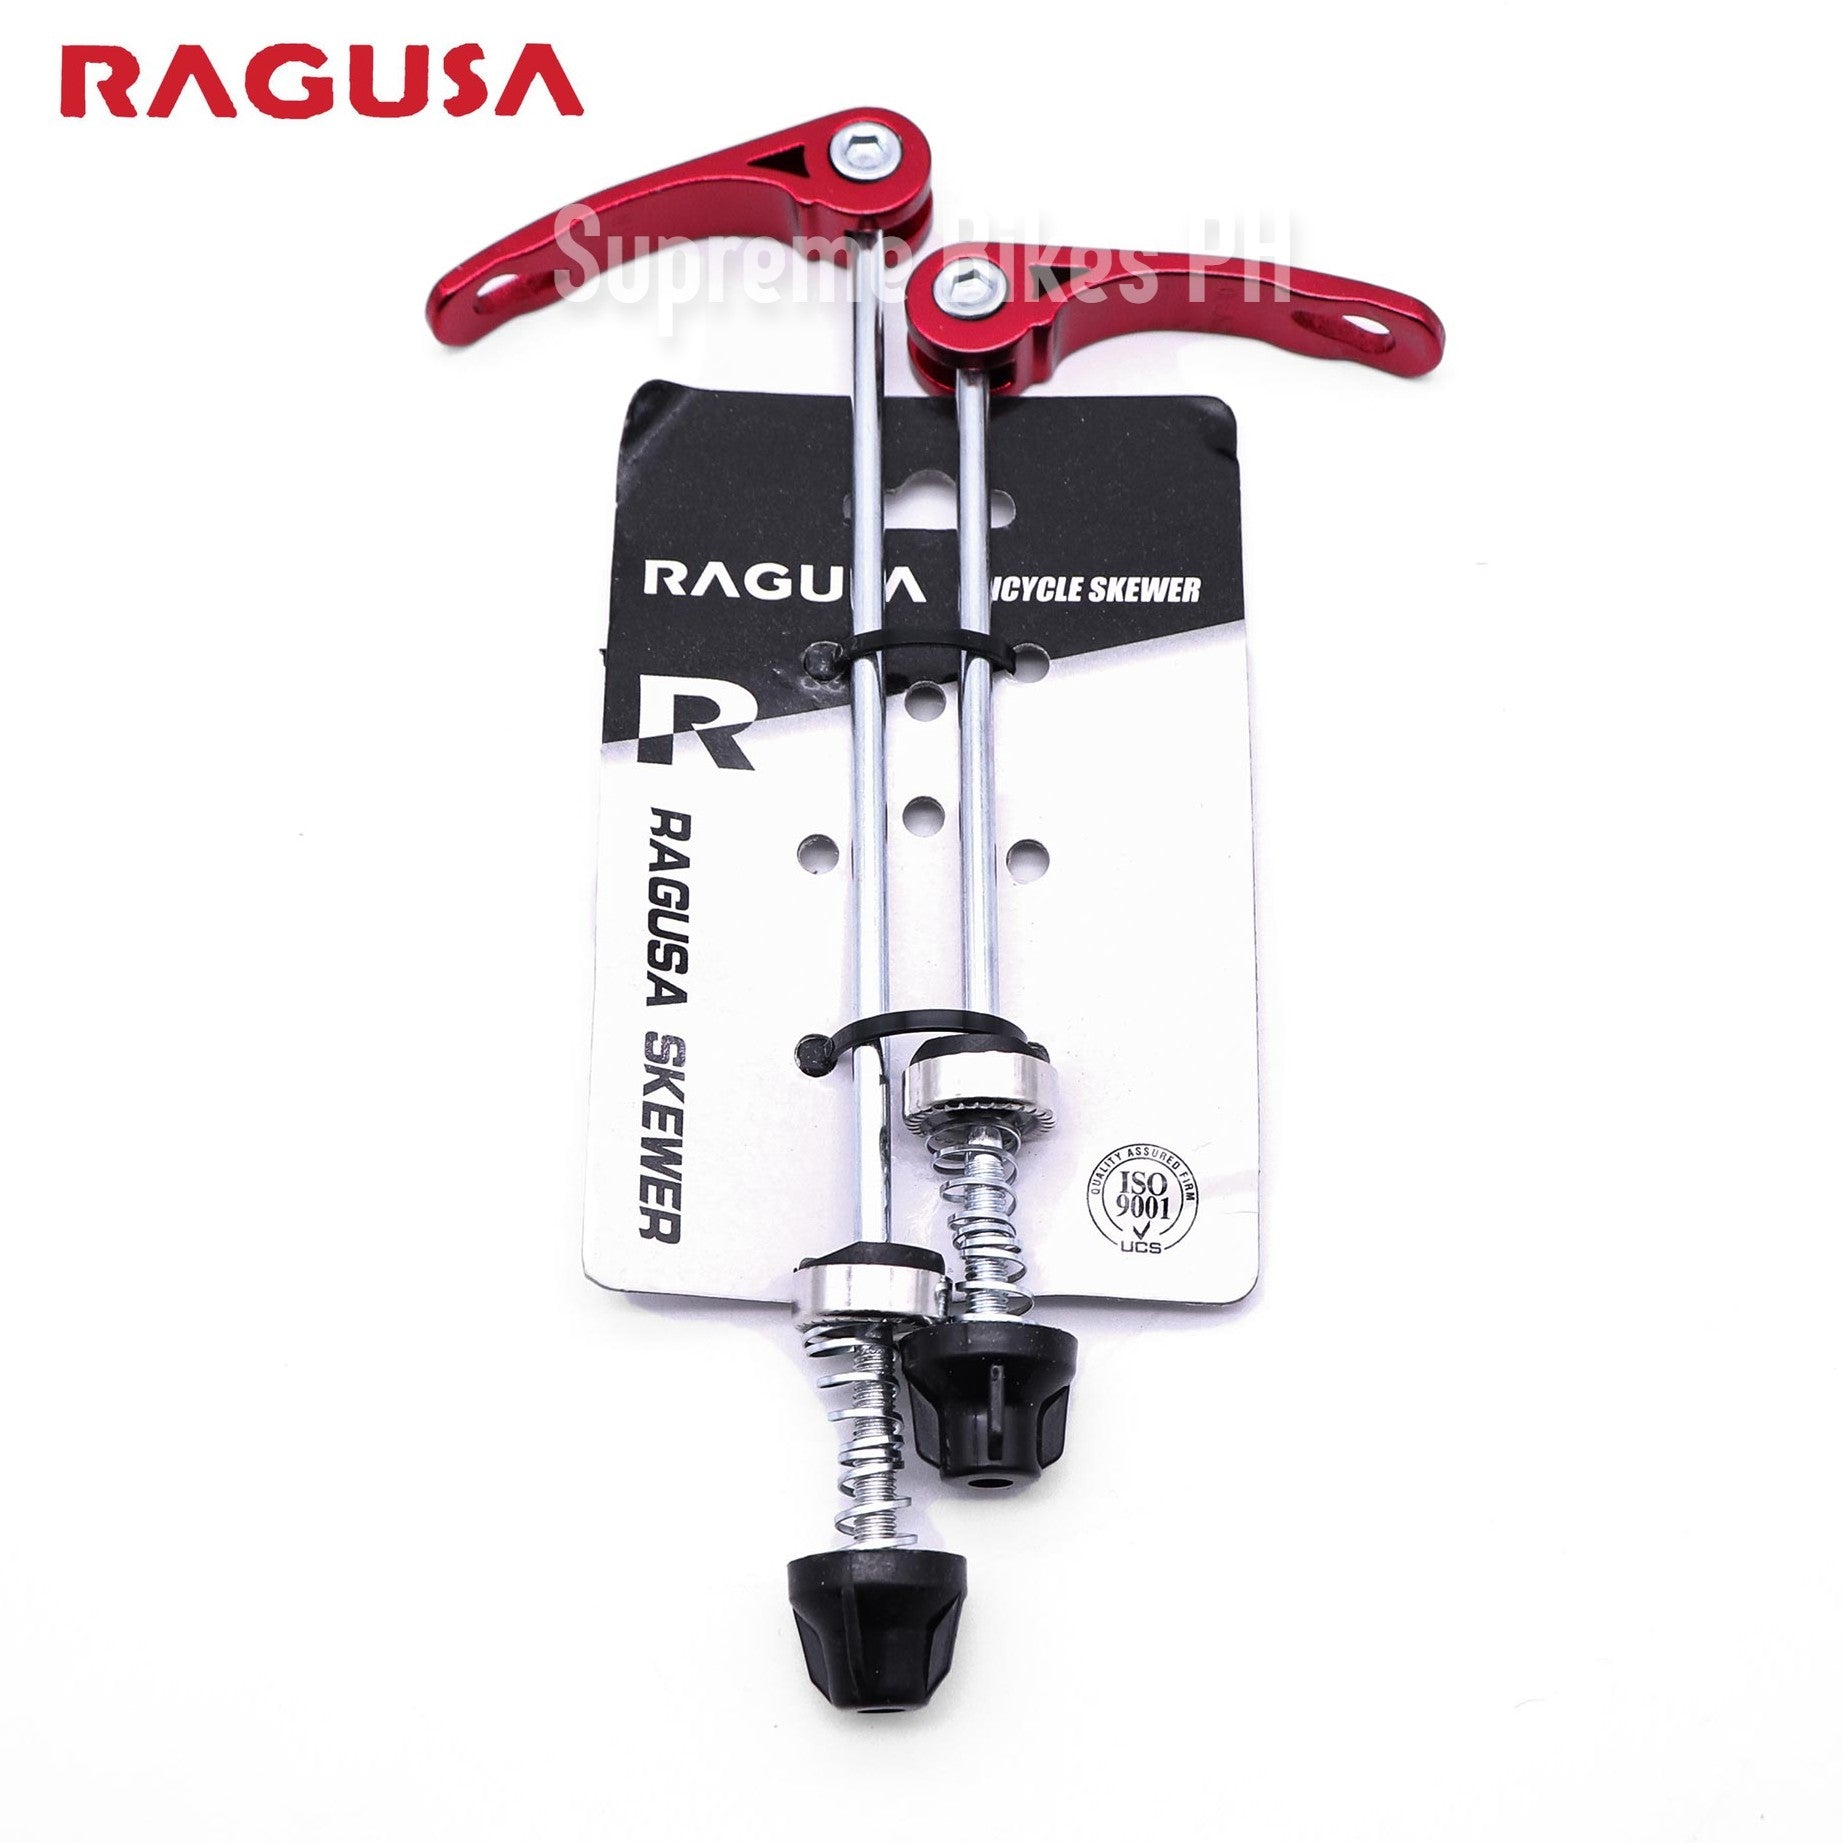 Ragusa Quick Release QR Skewers - Black – Supreme Bikes PH